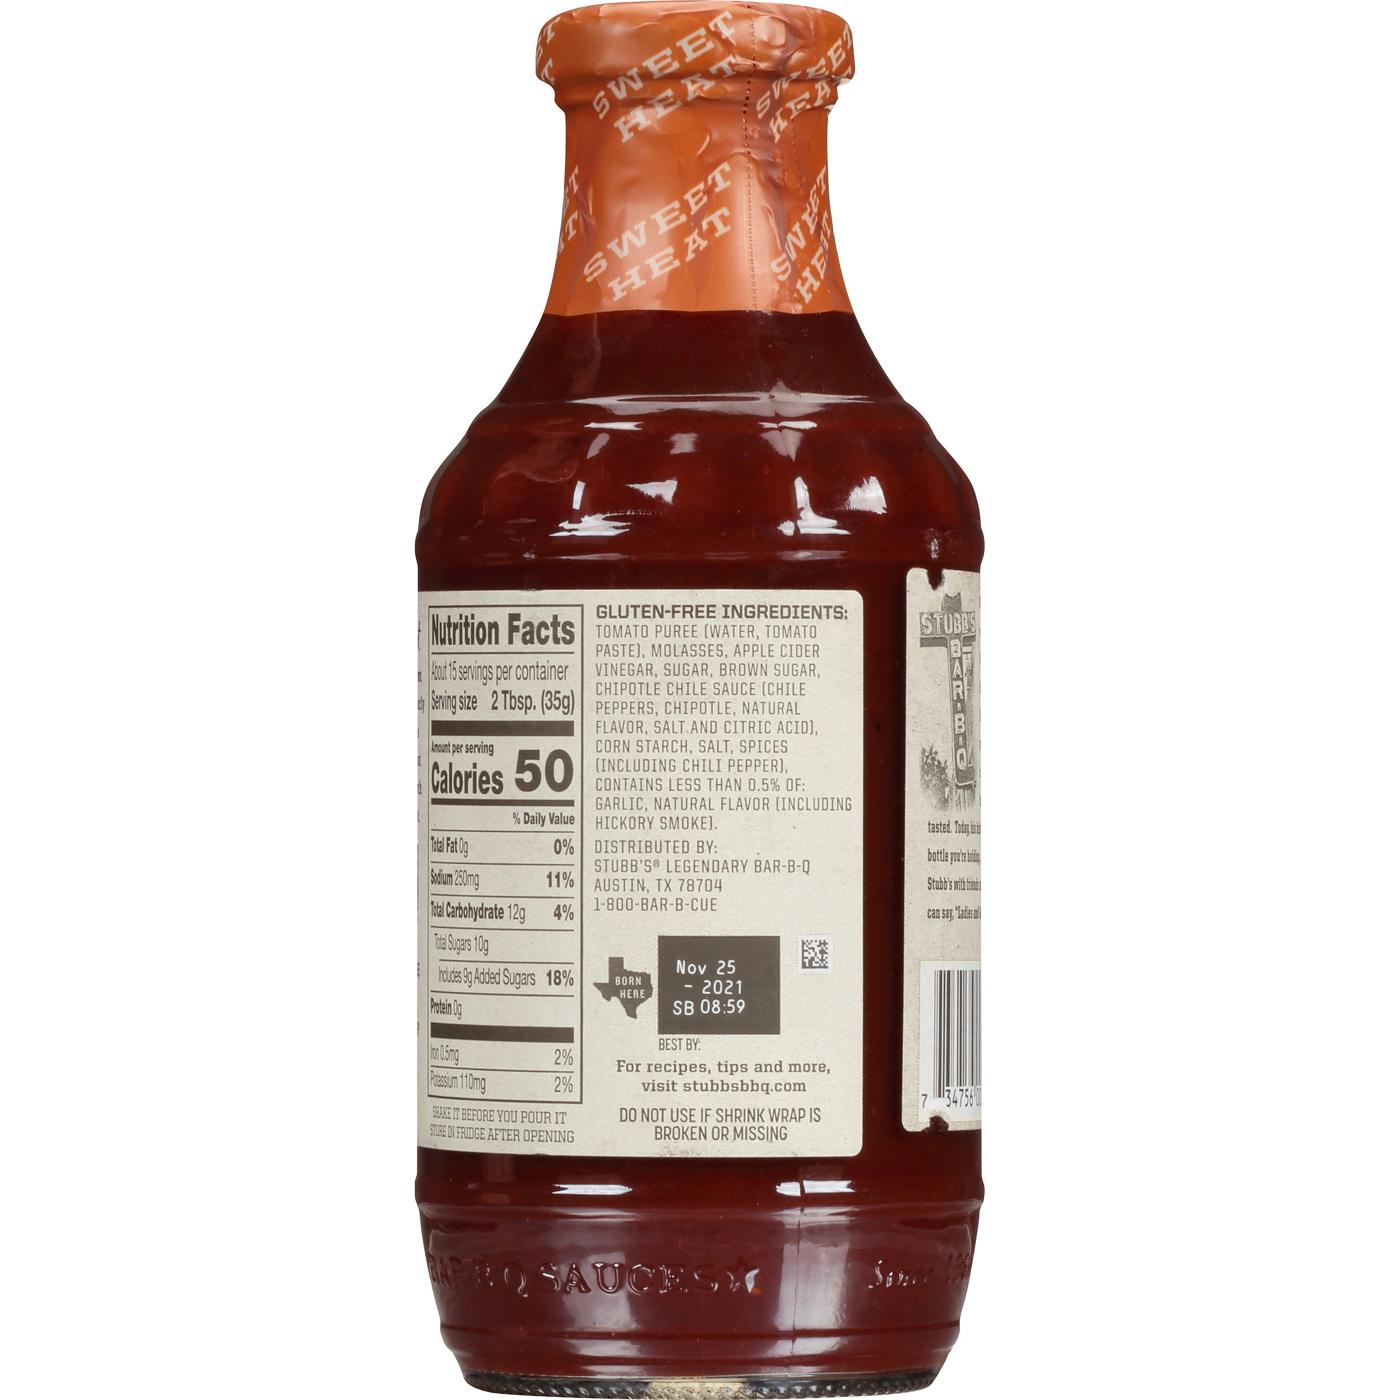 Stubb's Sweet Heat Bar-B-Q Sauce; image 7 of 10